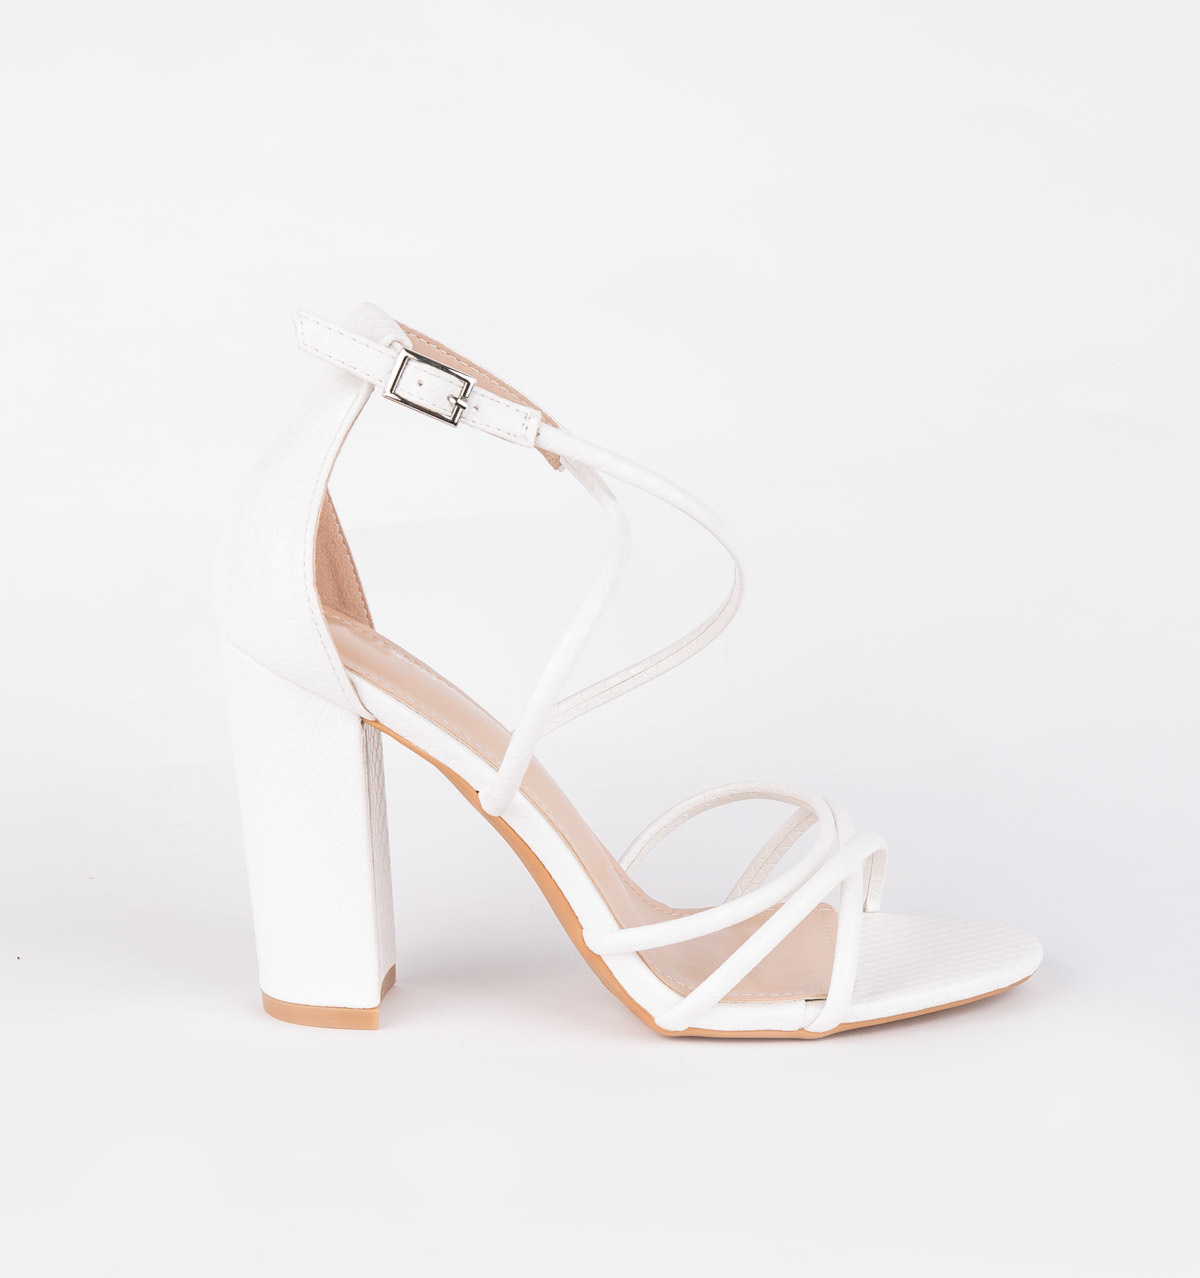 opvoeder Niet genoeg Pittig Shop FEEL THIS Witte sandalen | Elise Store - Elise Store